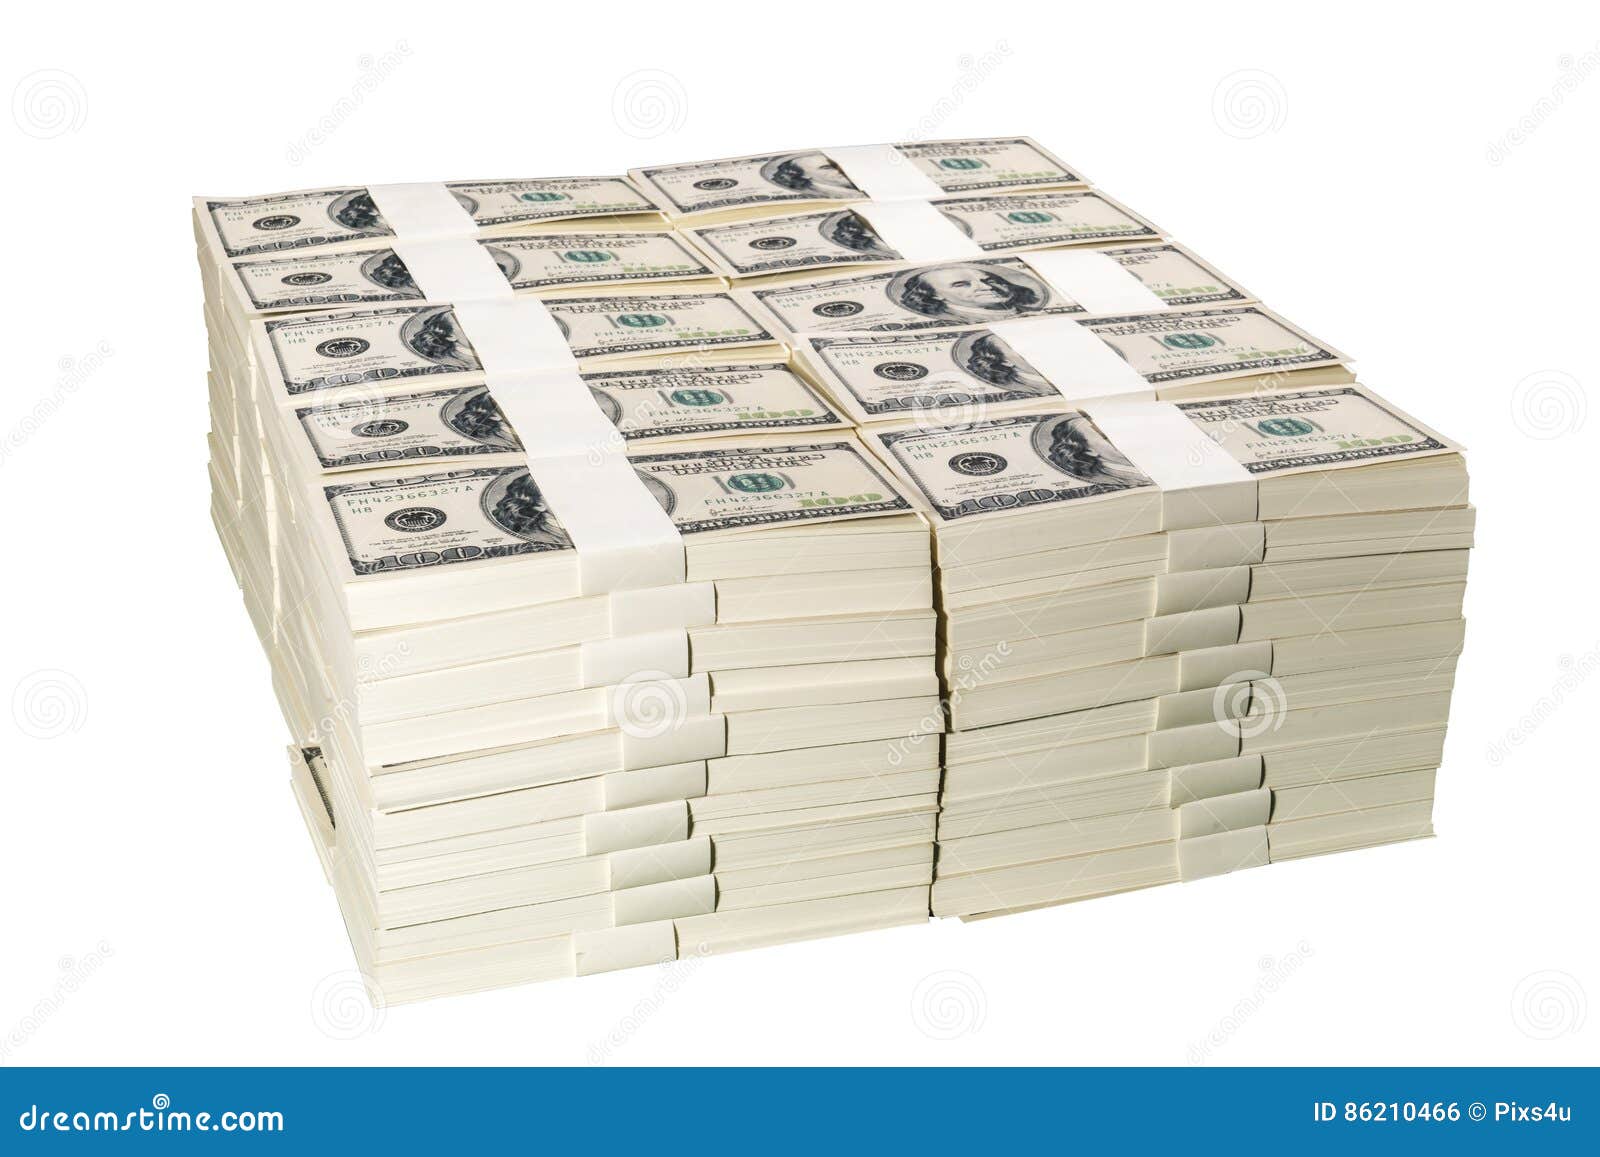 stacks-of-one-million-us-dollars-in-hundred-dollar-banknotes-stock-image-cartoondealer